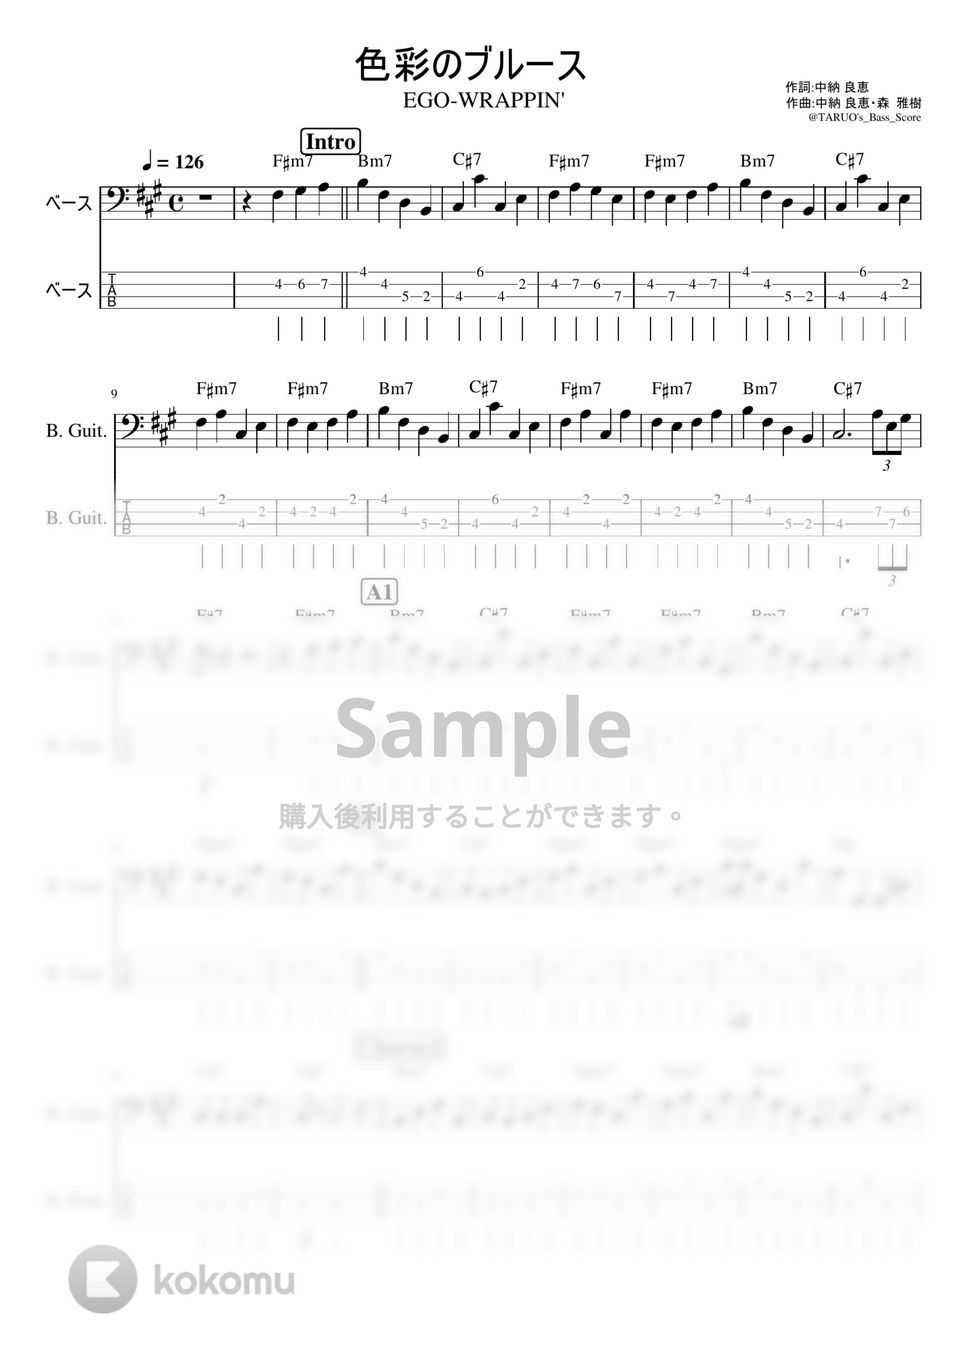 EGO-WRAPPIN' - 色彩のブルース (ベース / TAB) タブ + 五線譜 by TARUO's_Bass_Score